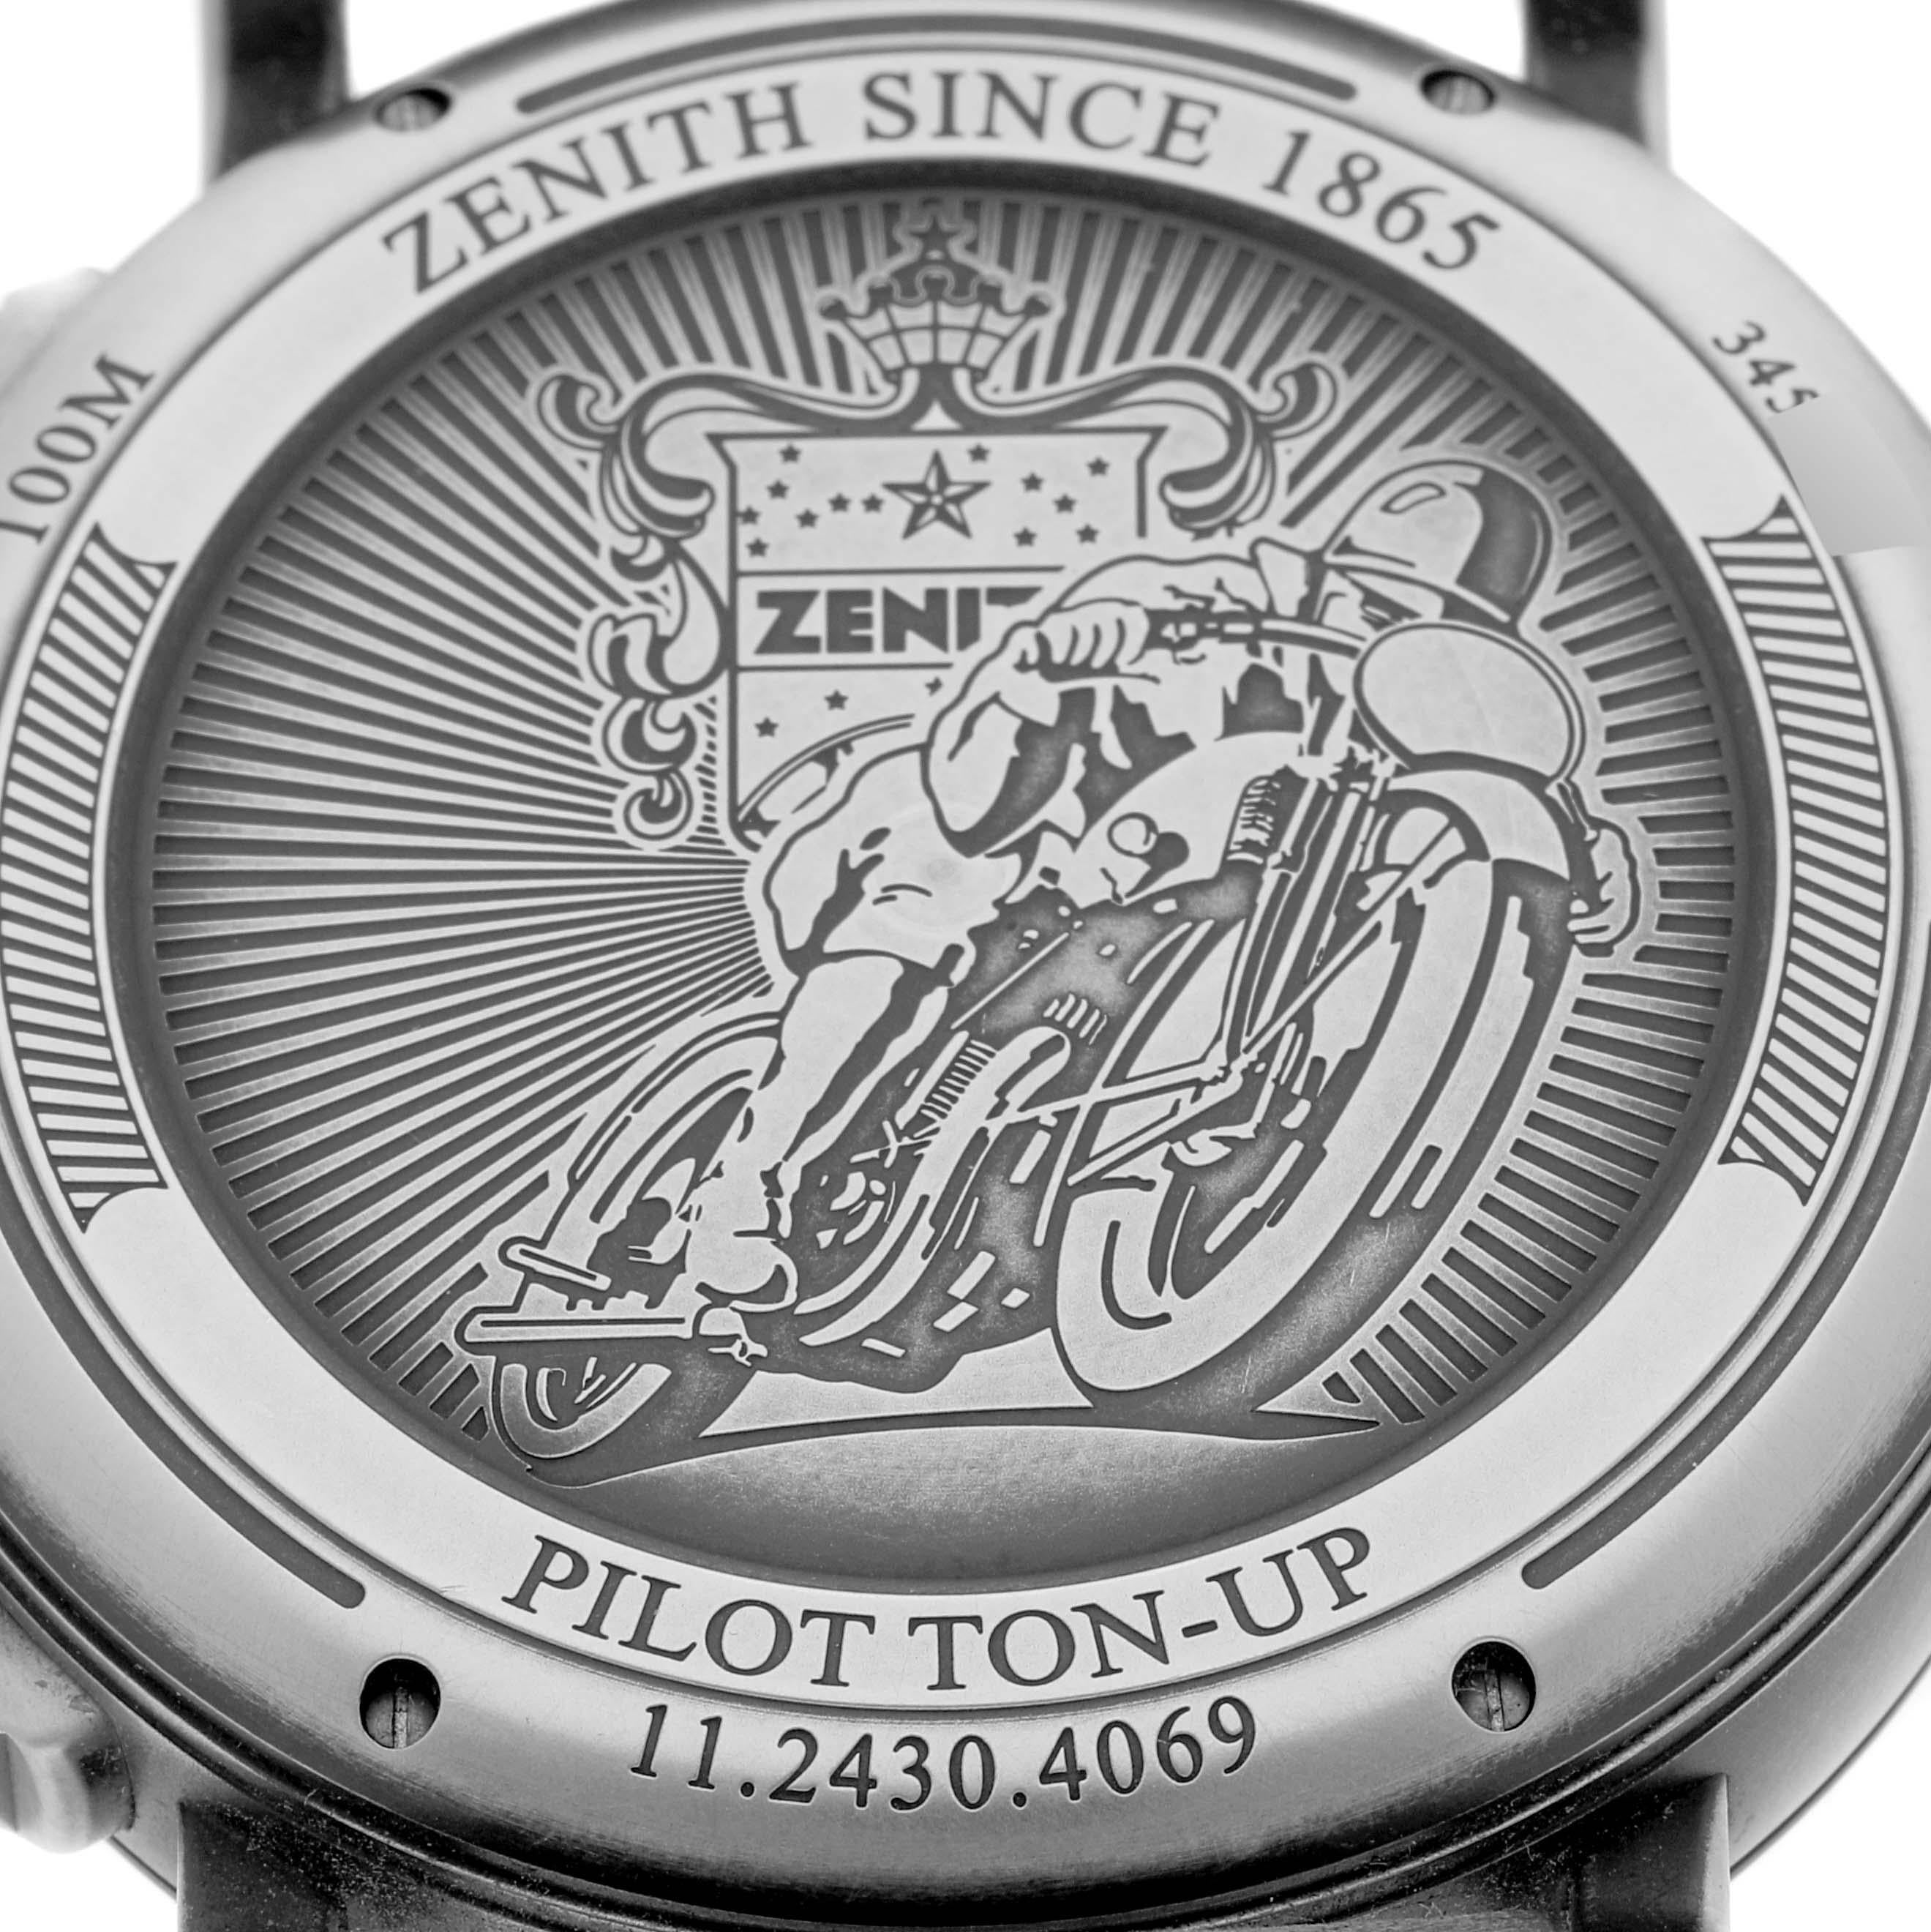 Zenith Heritage Pilot Type 20 Chronograph Steel Titanium Mens Watch 11.2430.4069 For Sale 2